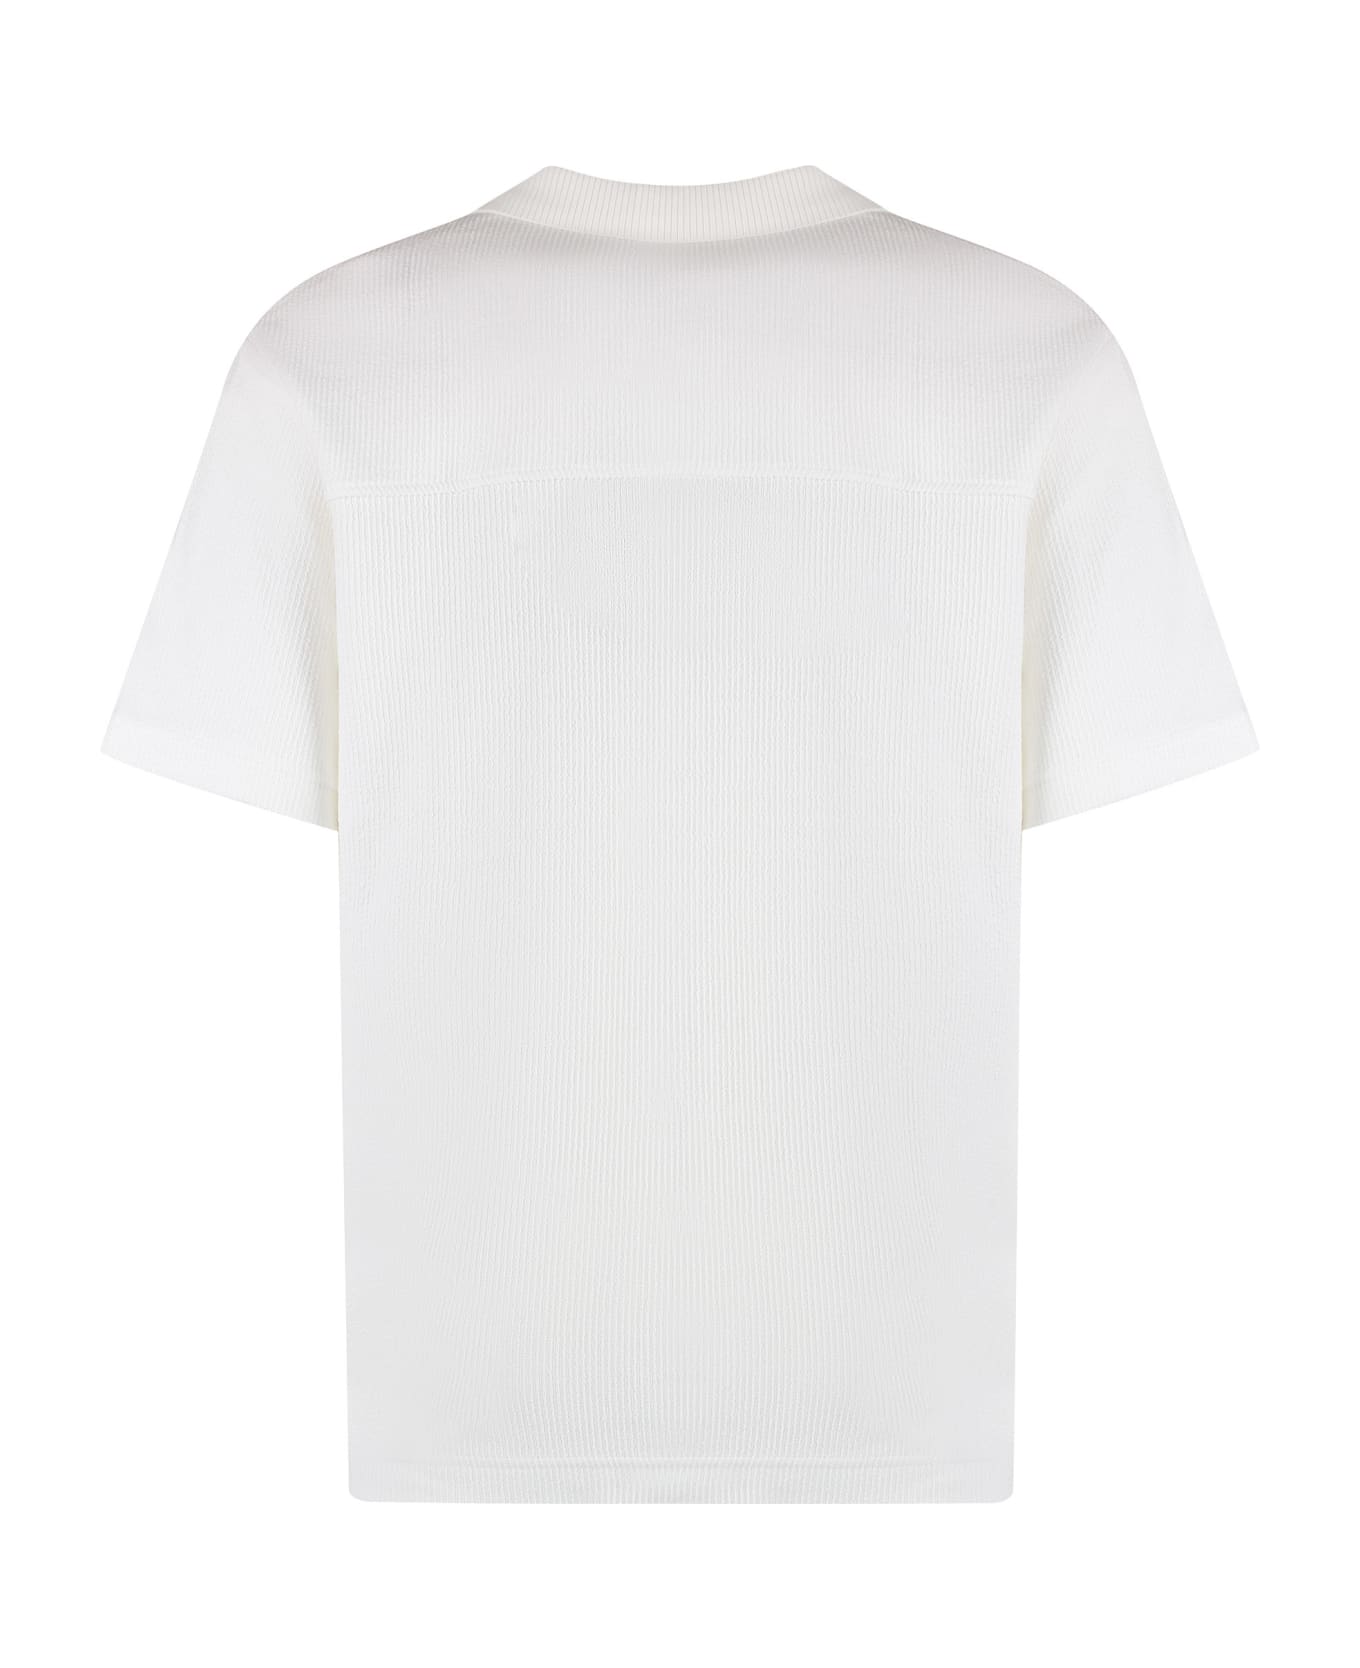 Hugo Boss Short Sleeve Cotton Shirt - White